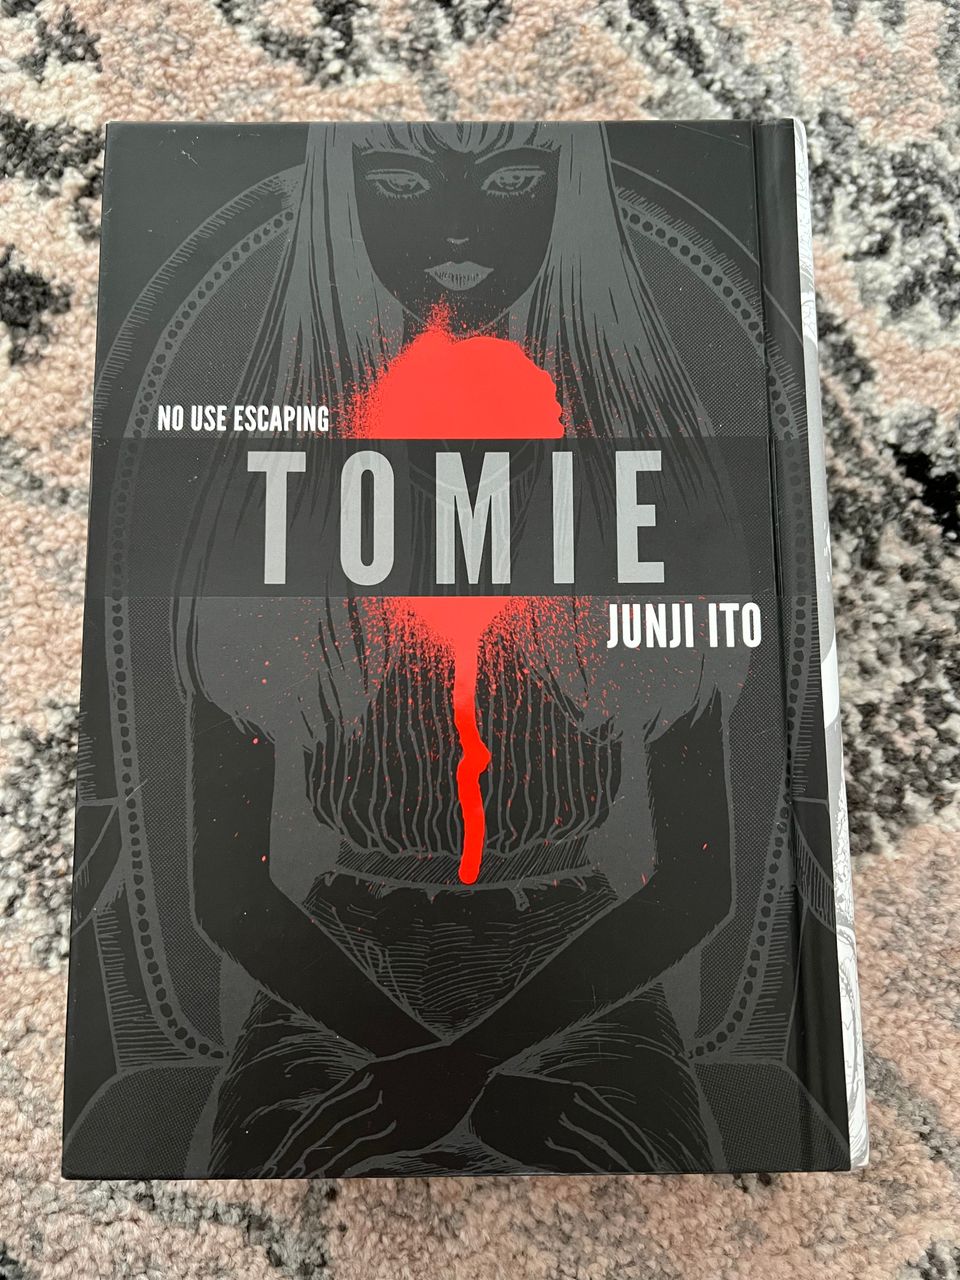 Tomie Deluxe Edition Junji Ito manga